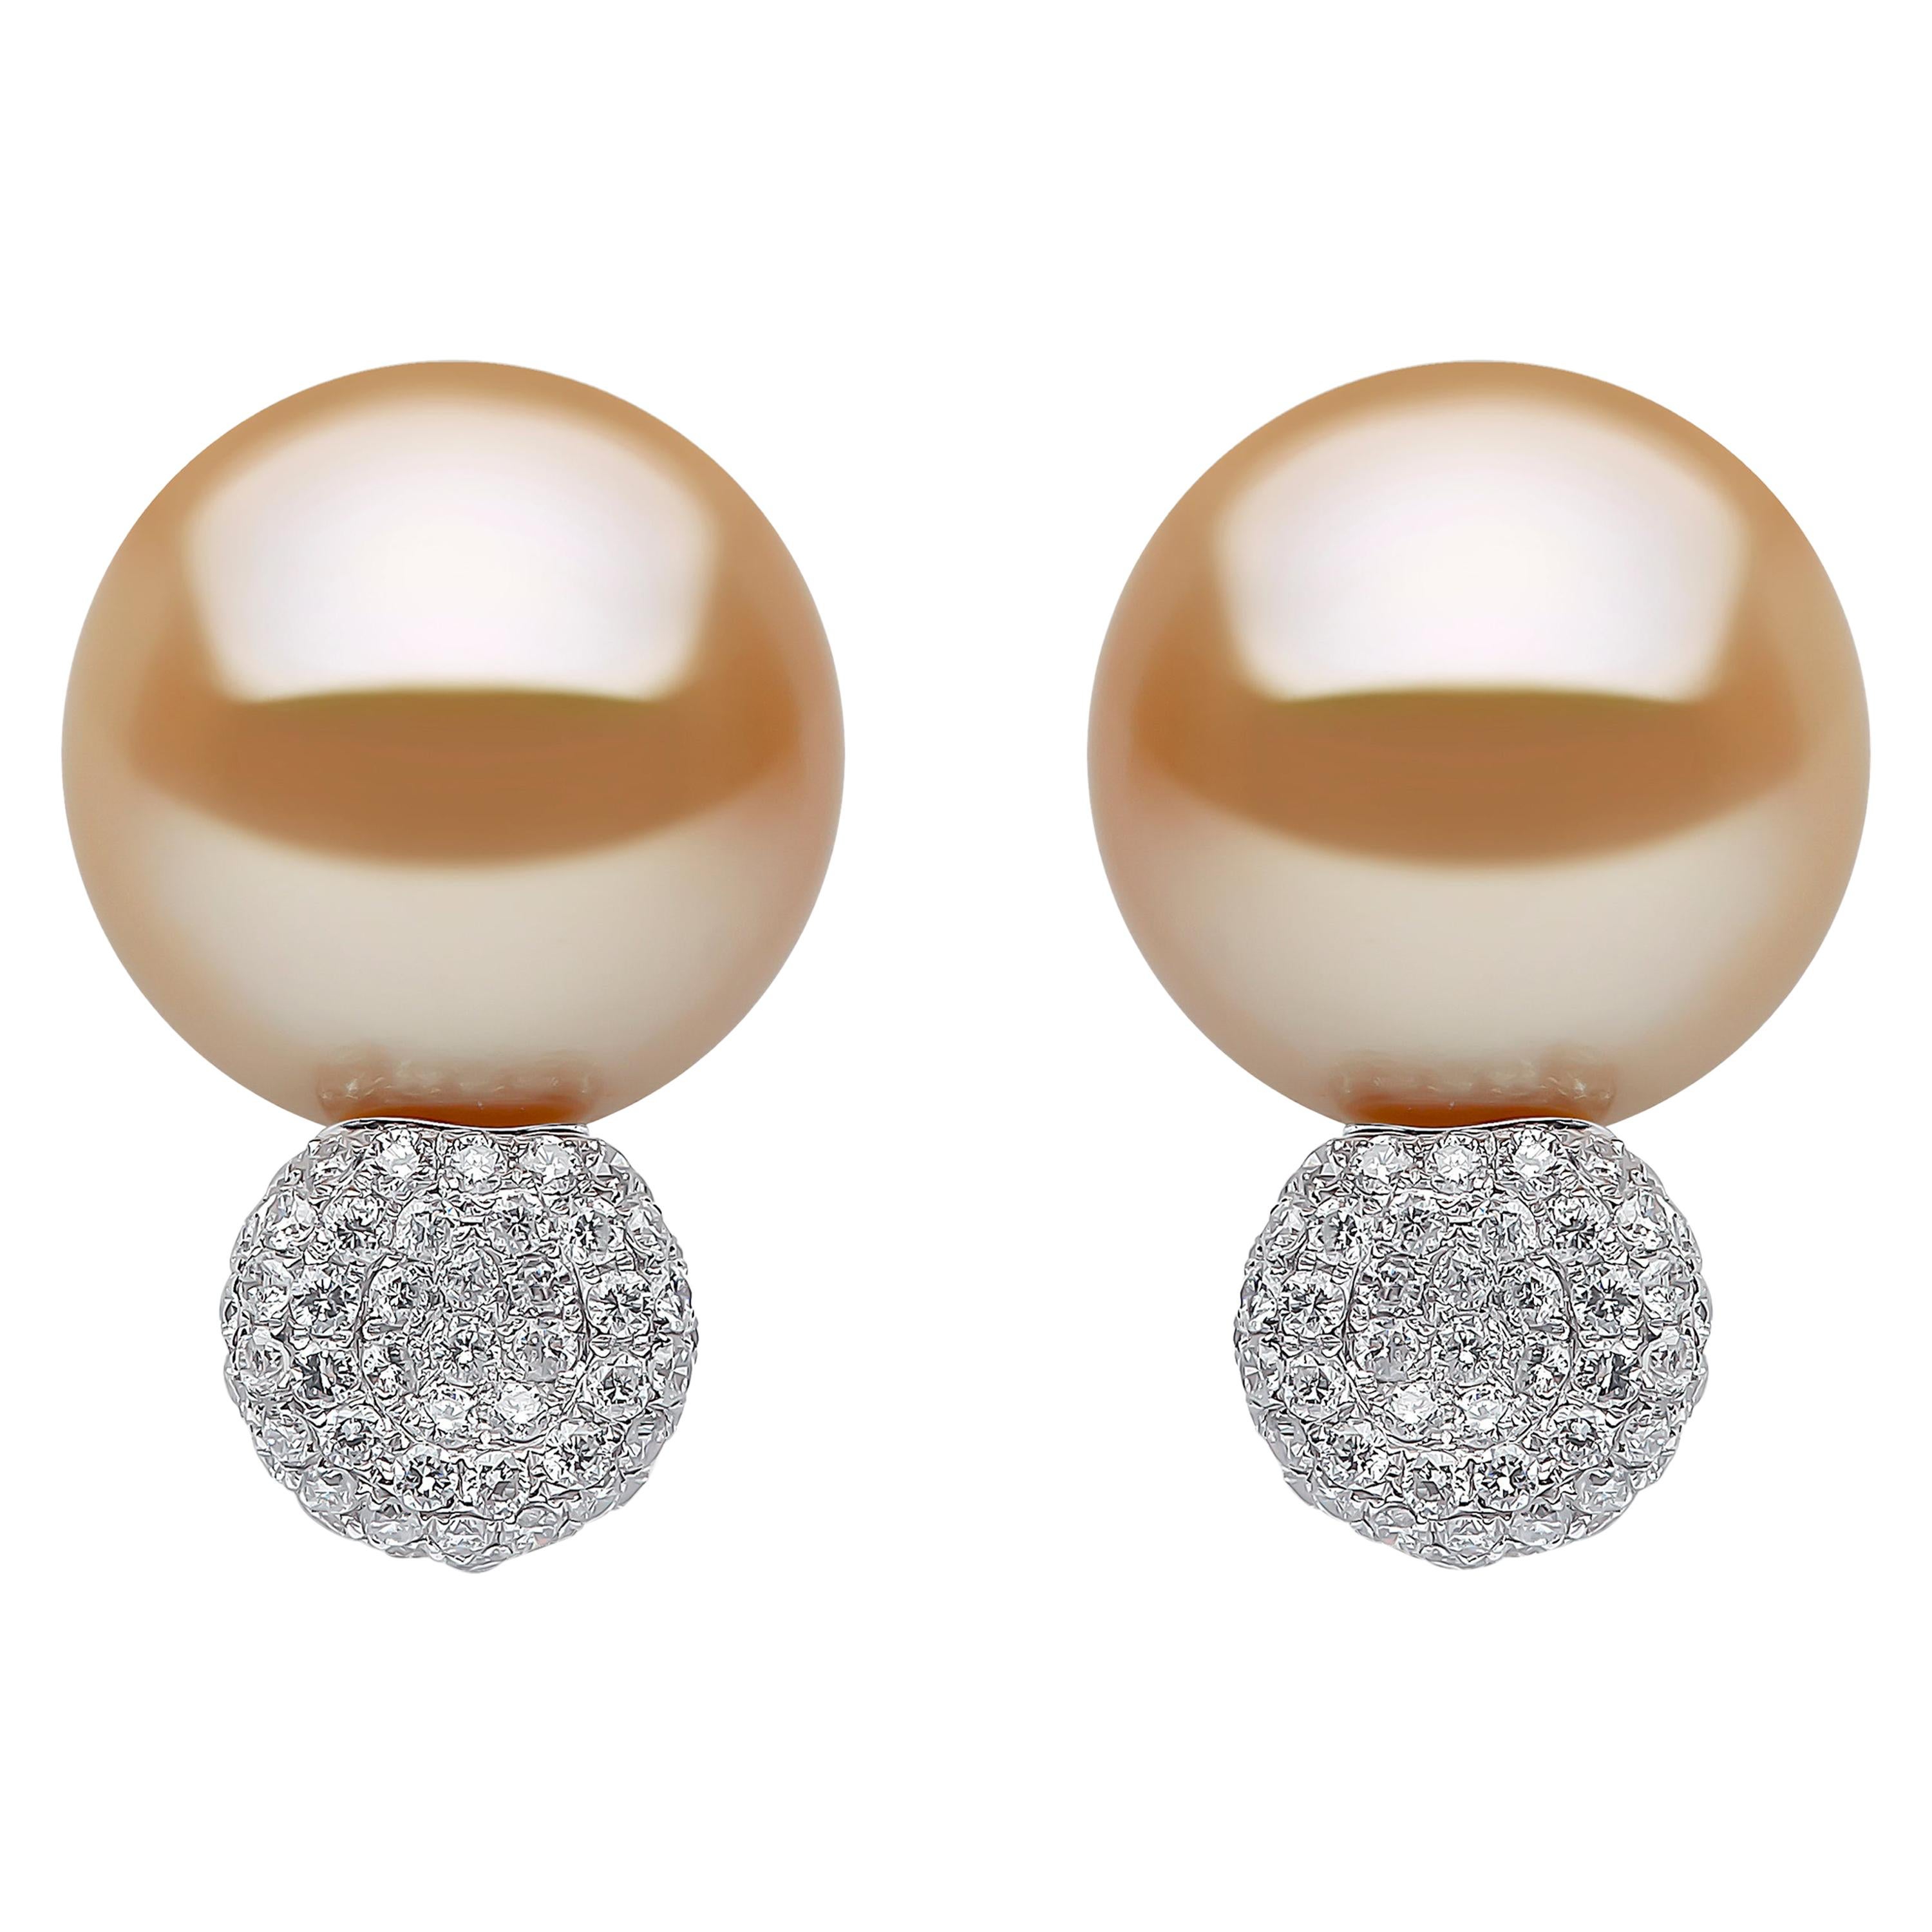 Yoko London Golden South Sea Pearl and Diamond Earrings in 18 Karat White Gold